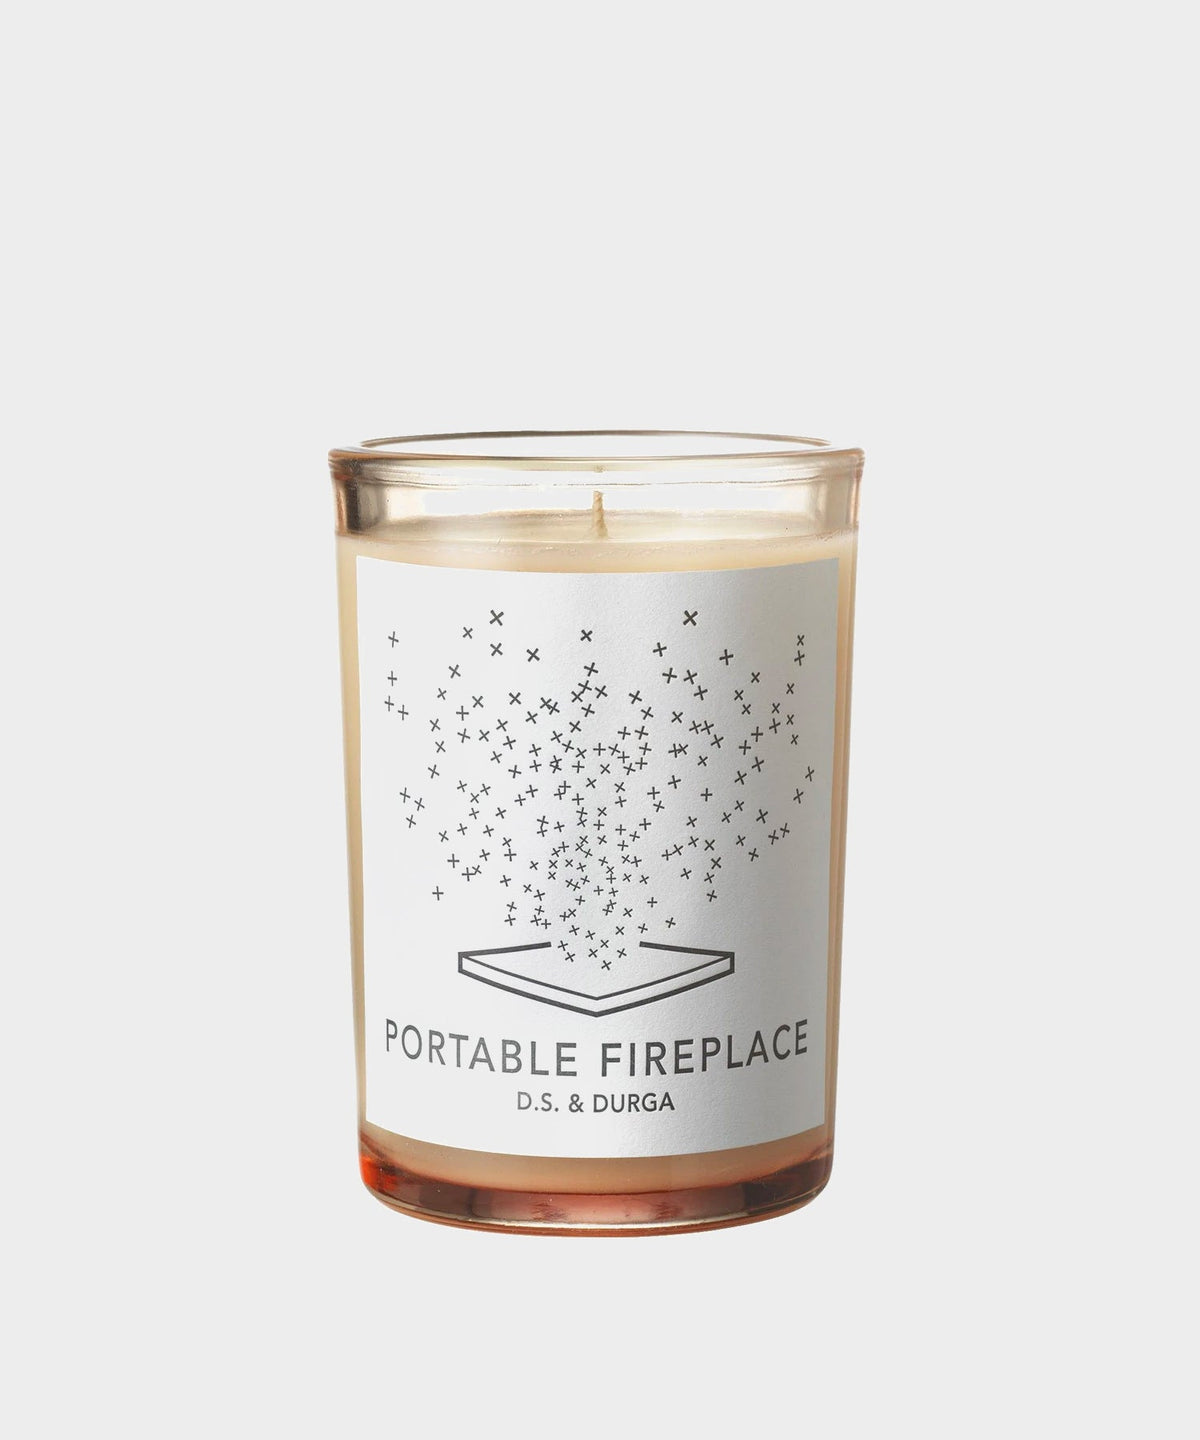 D.S. & Durga Portable Fireplace 7oz Candle